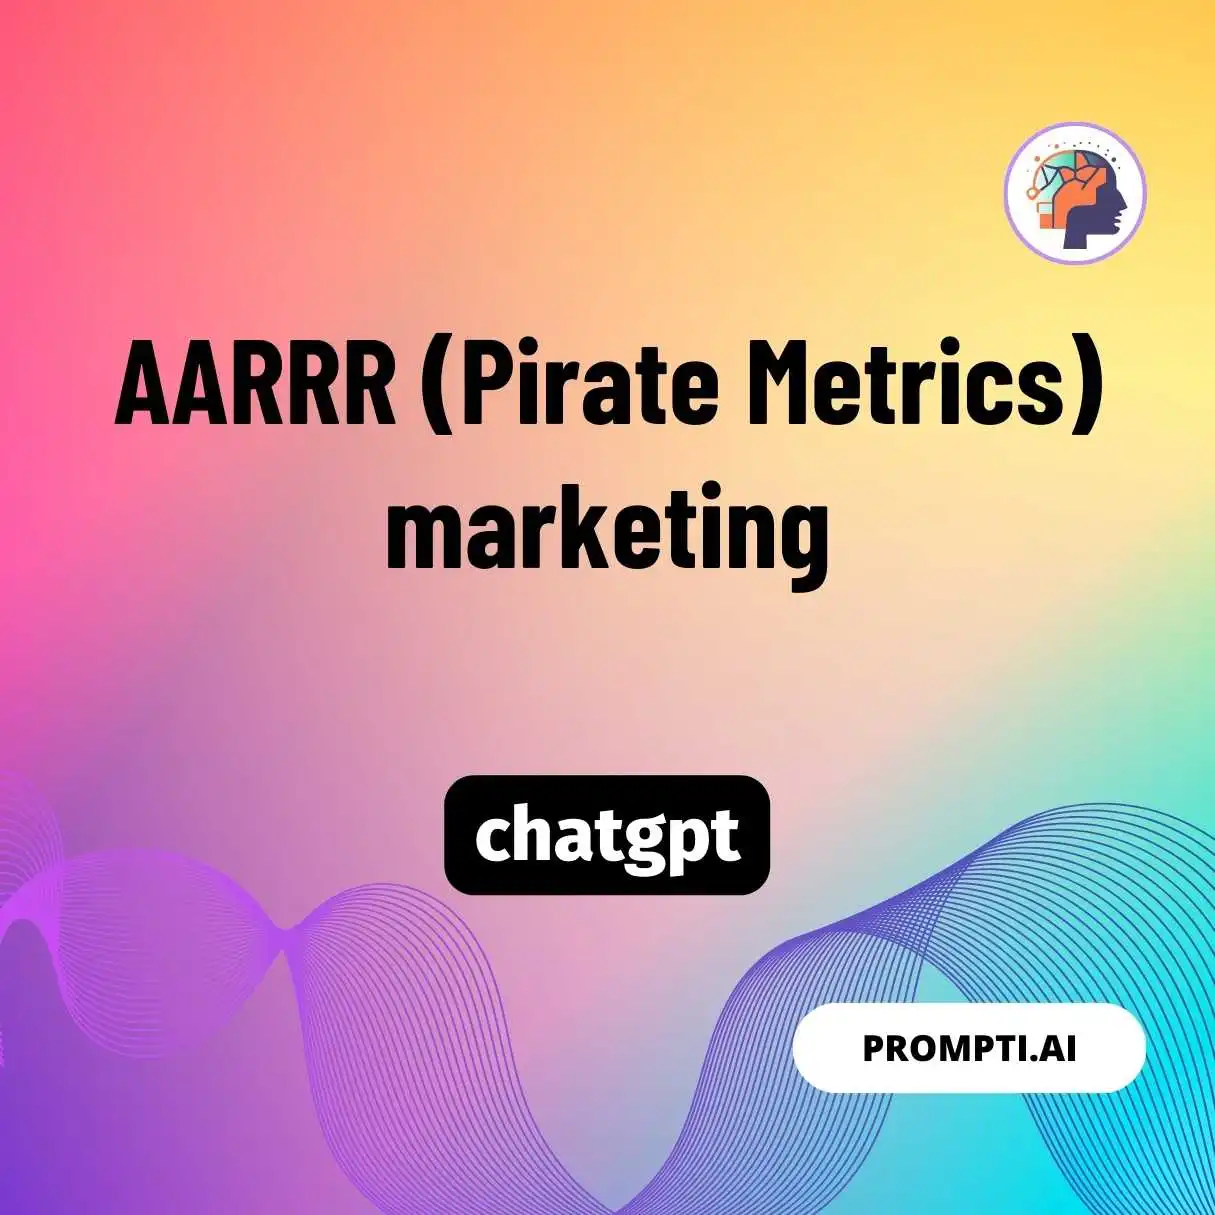 AARRR (Pirate Metrics) marketing